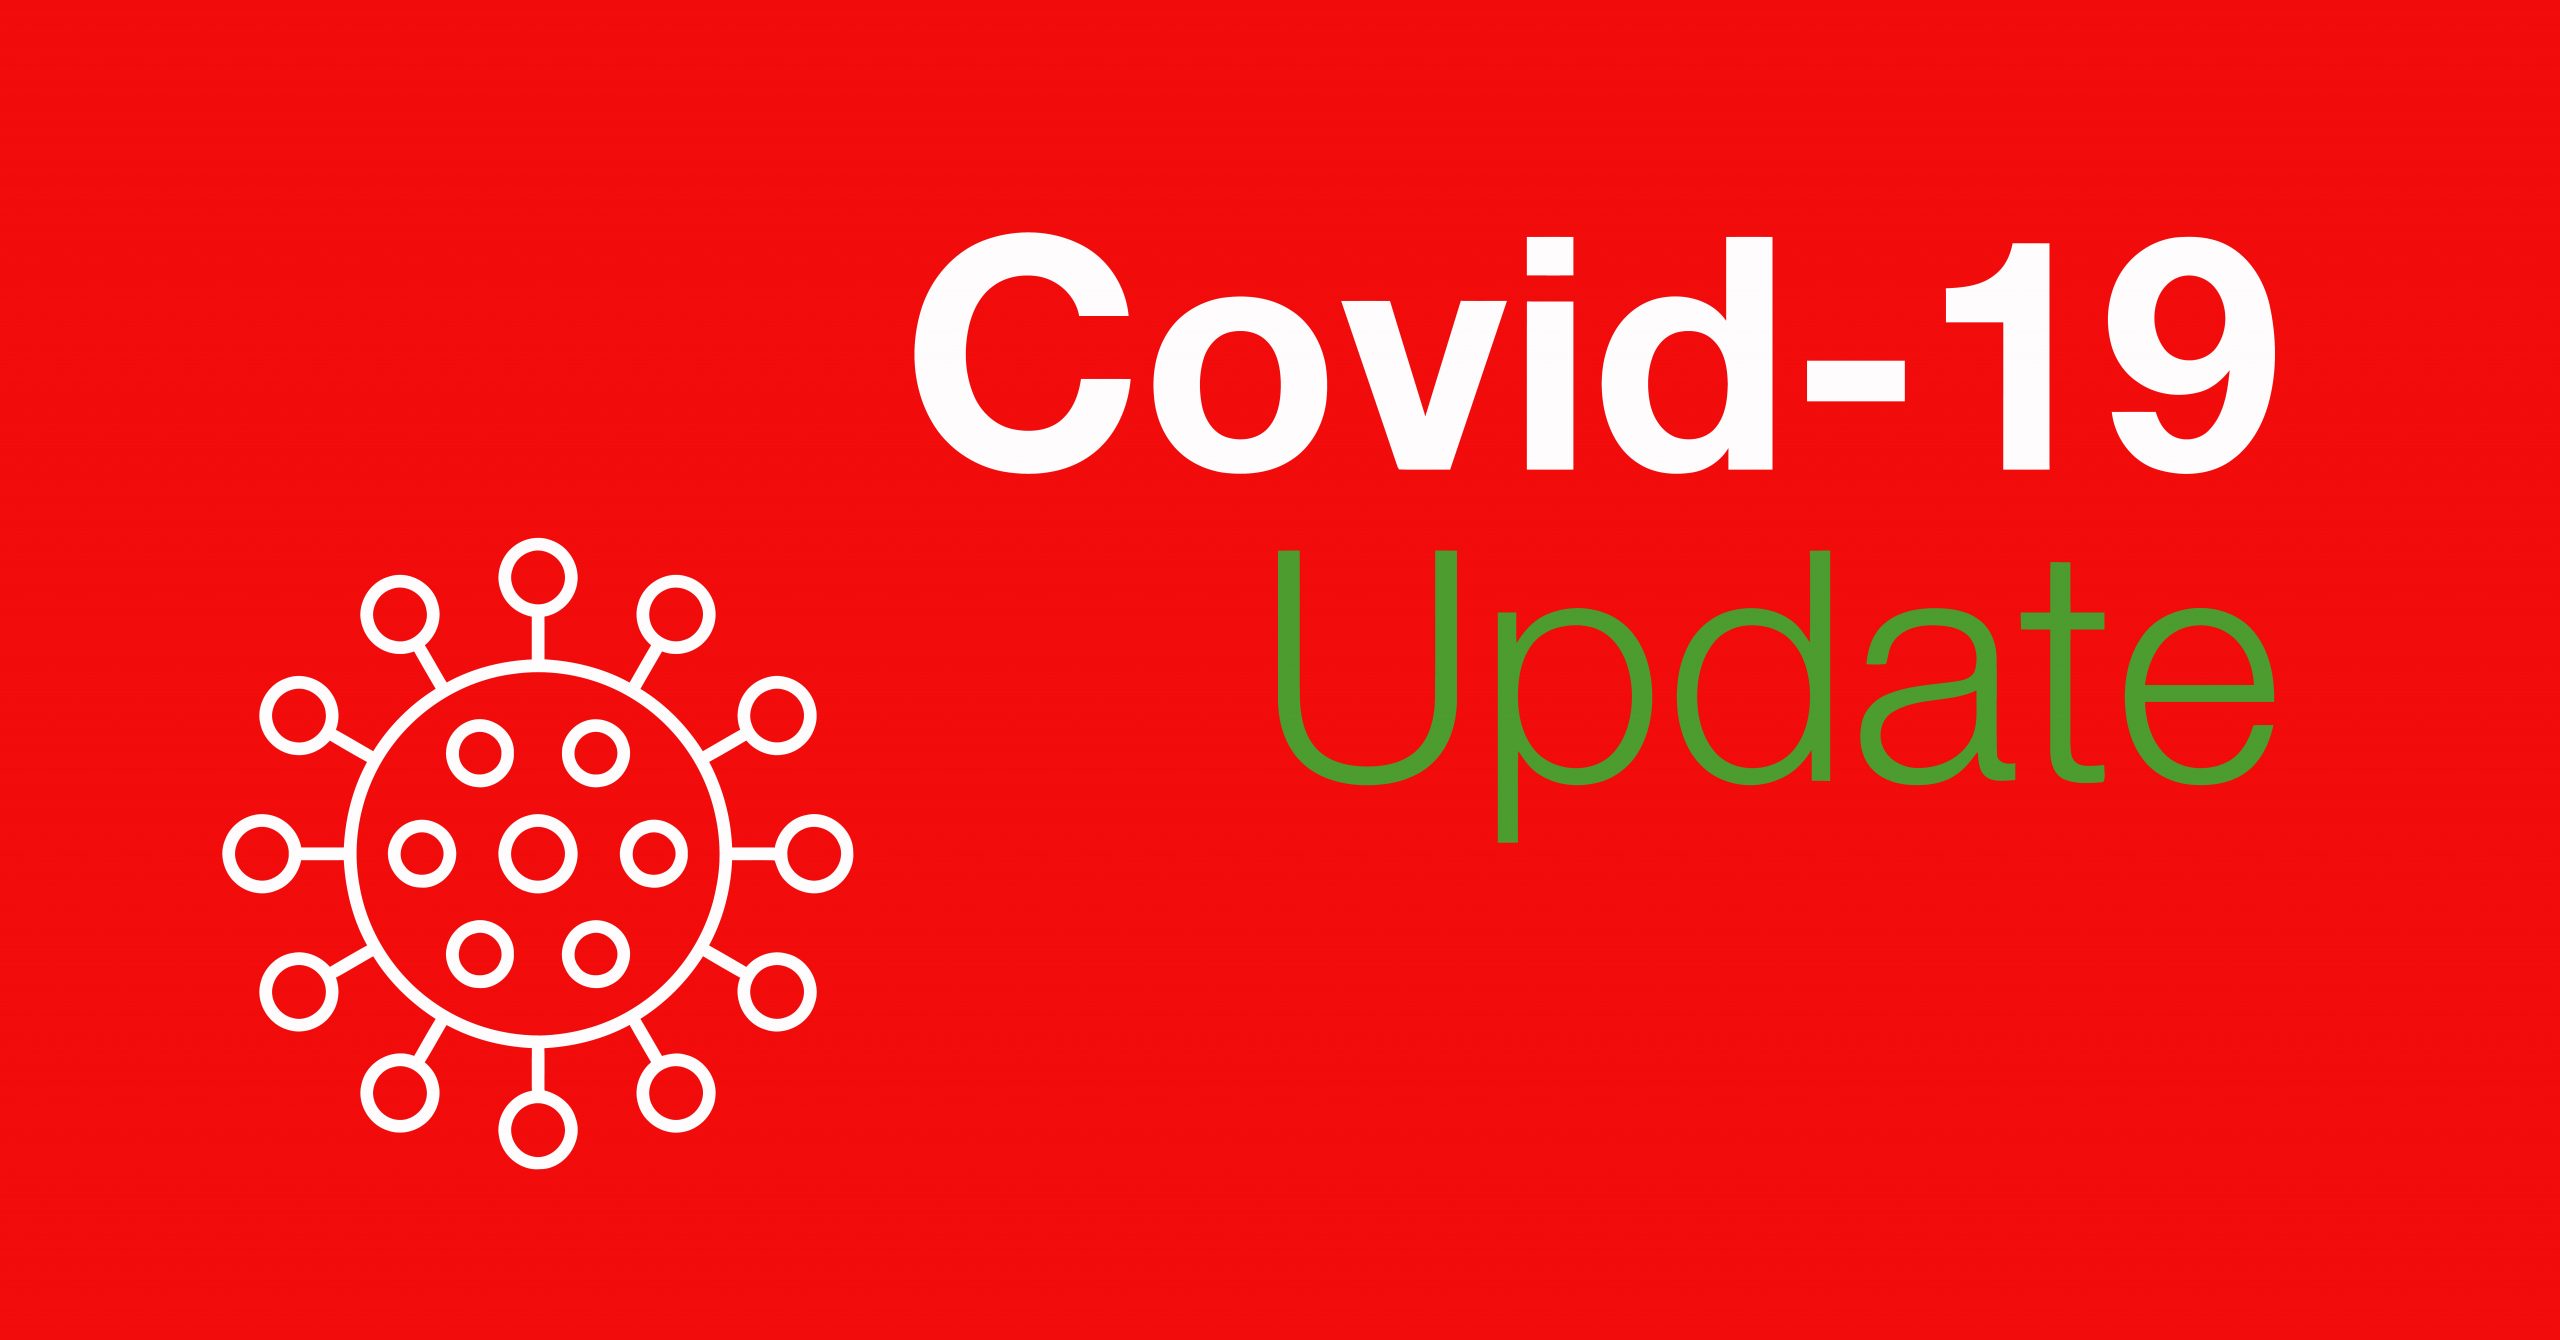 Patient COVID-19 update 19 August 2021